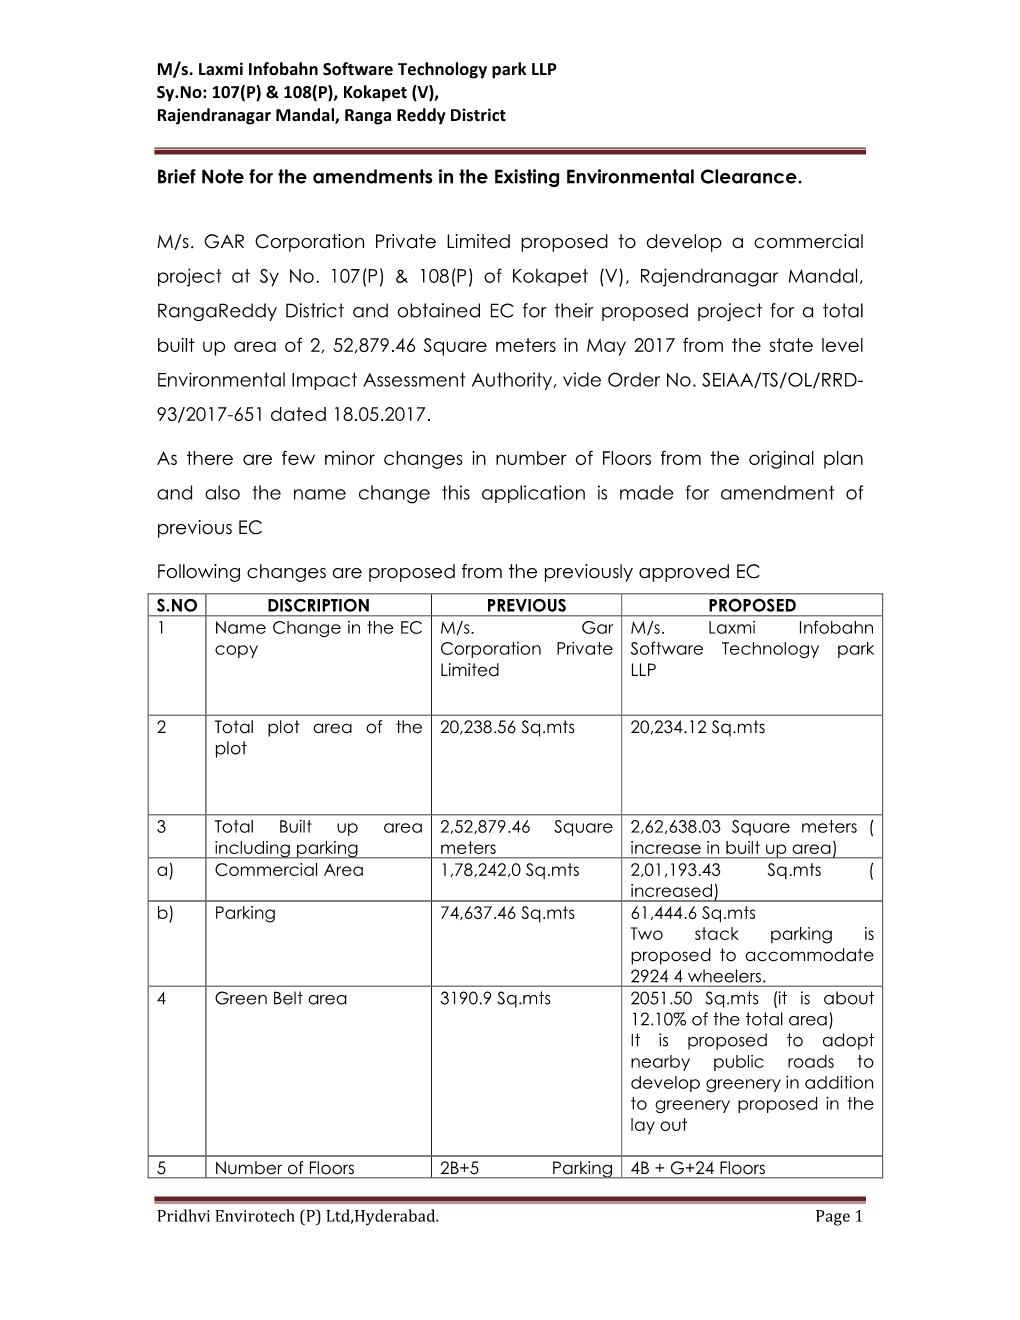 M/S. Laxmi Infobahn Software Technology Park LLP Sy.No: 107(P) & 108(P), Kokapet (V), Rajendranagar Mandal, Ranga Reddy District